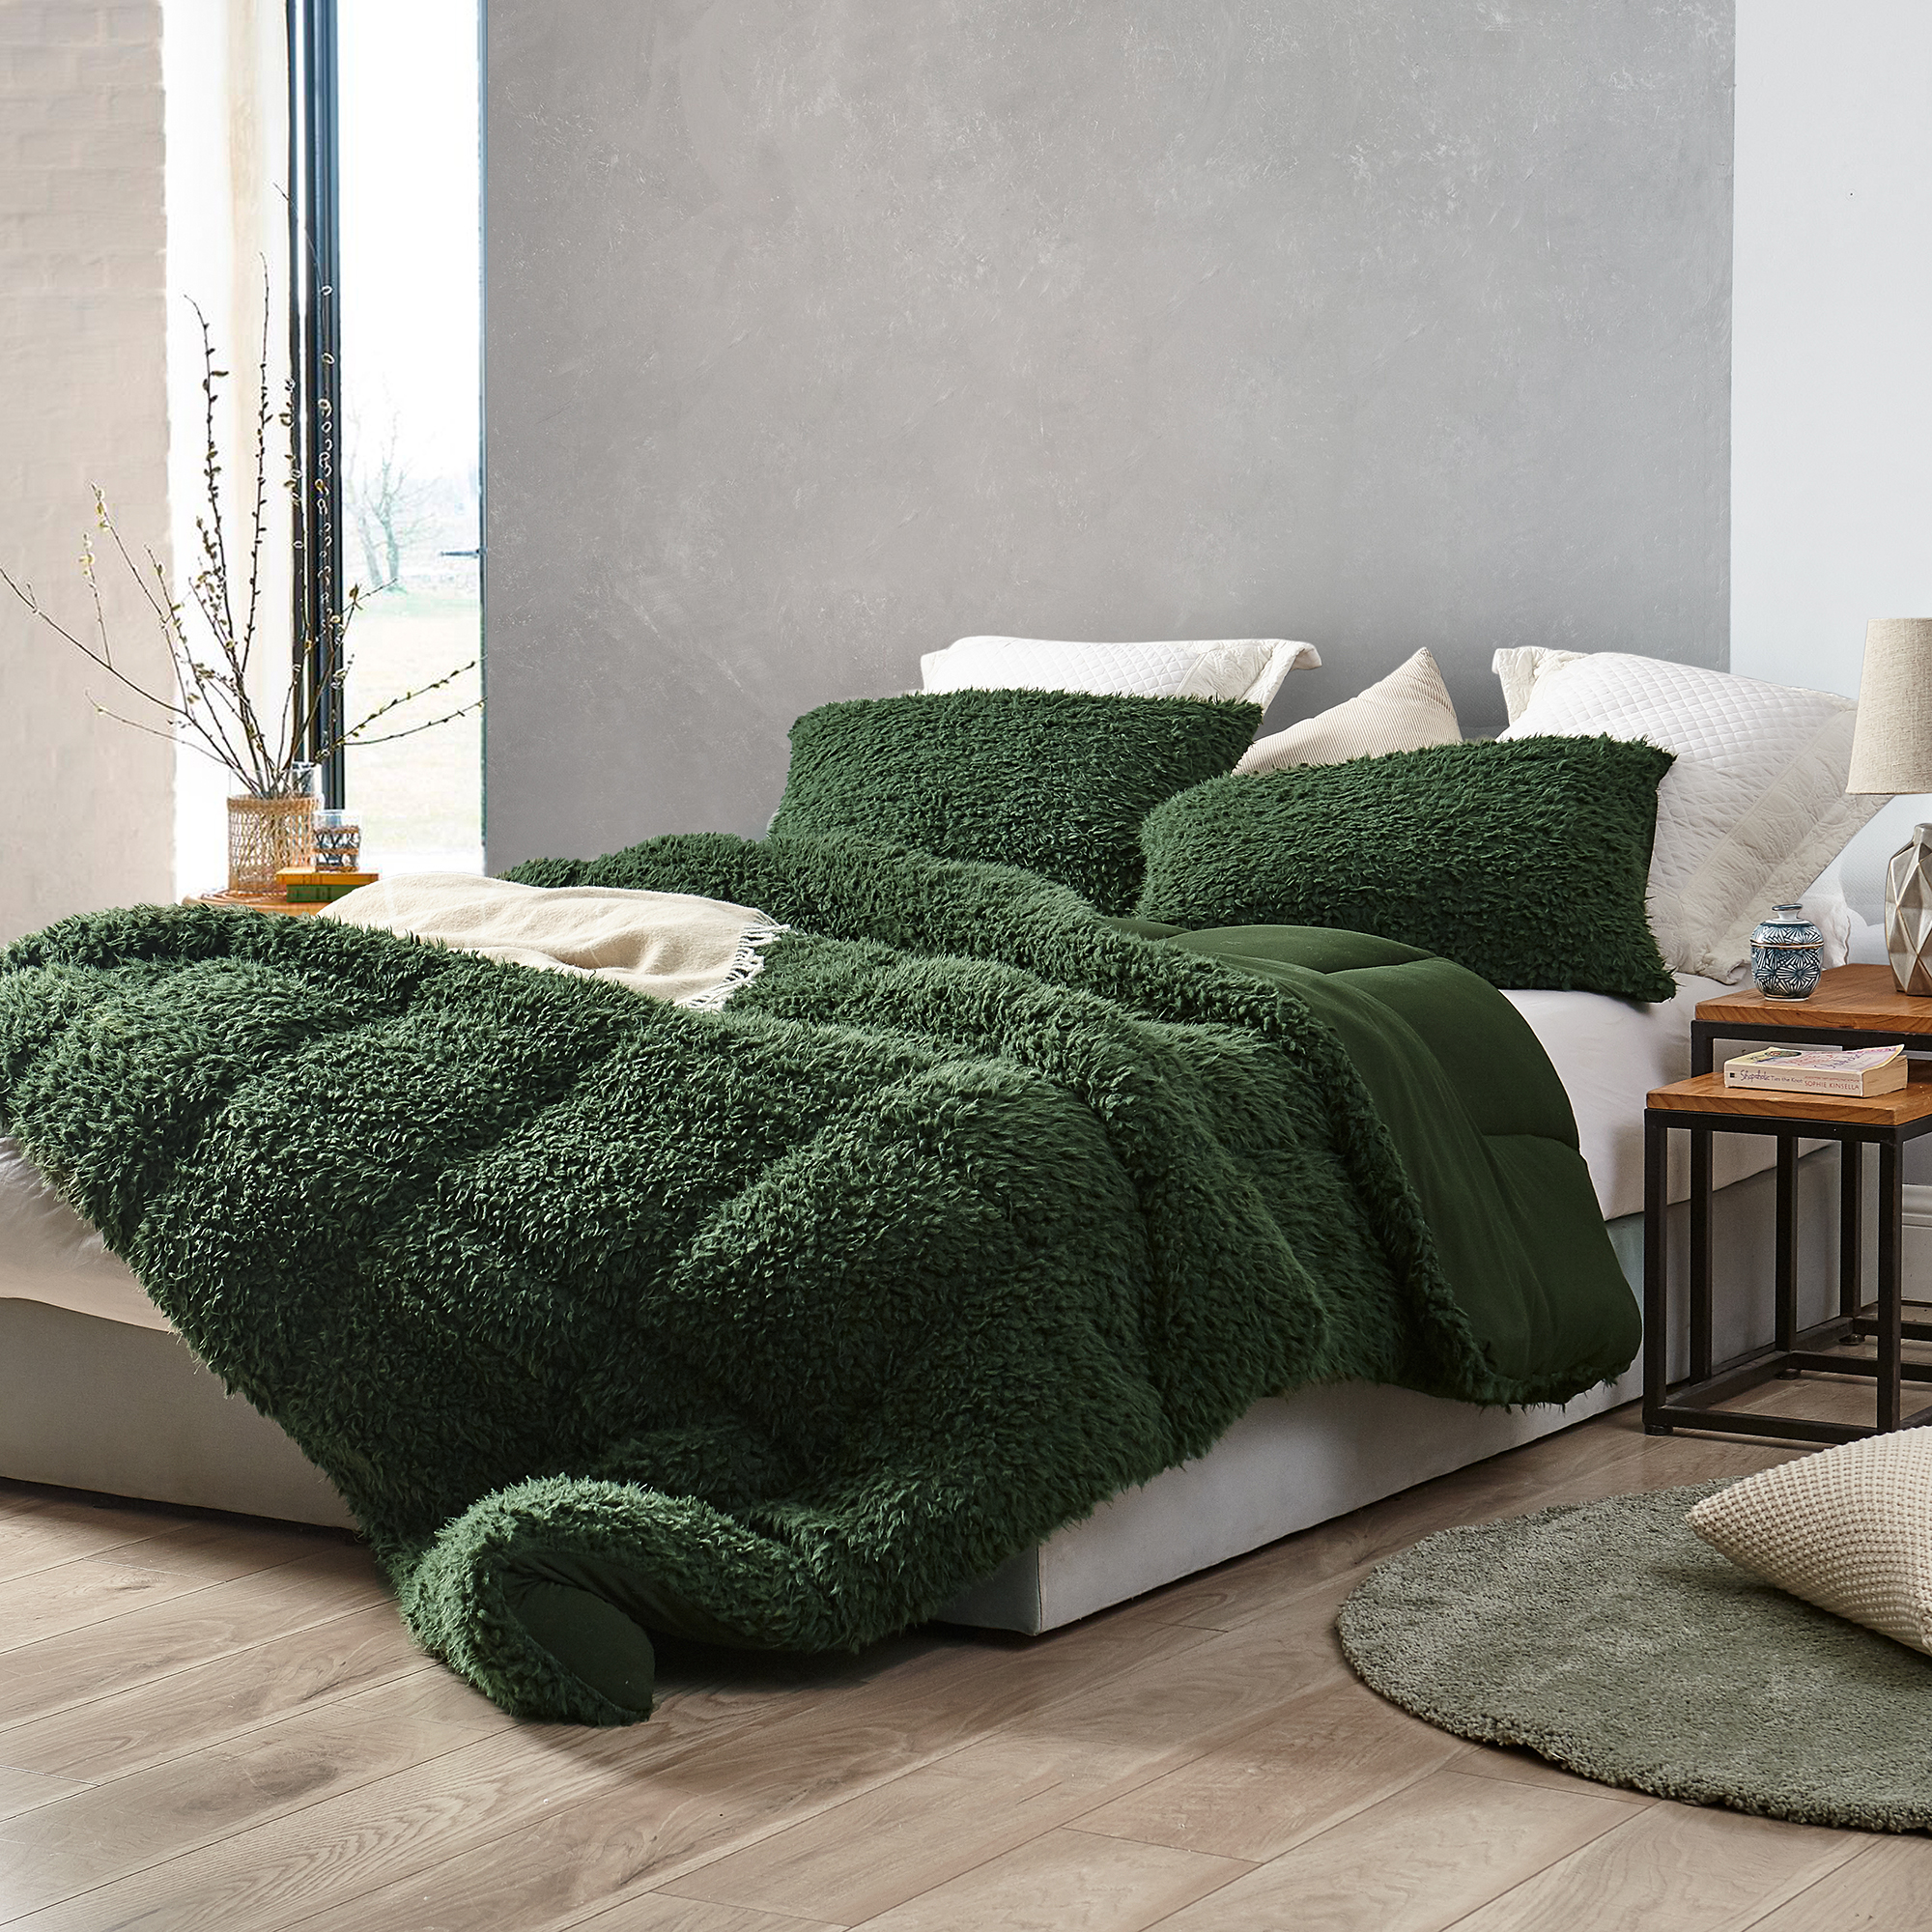 Trendy Green Bedroom Decor for Your Oversized King Bedding Set